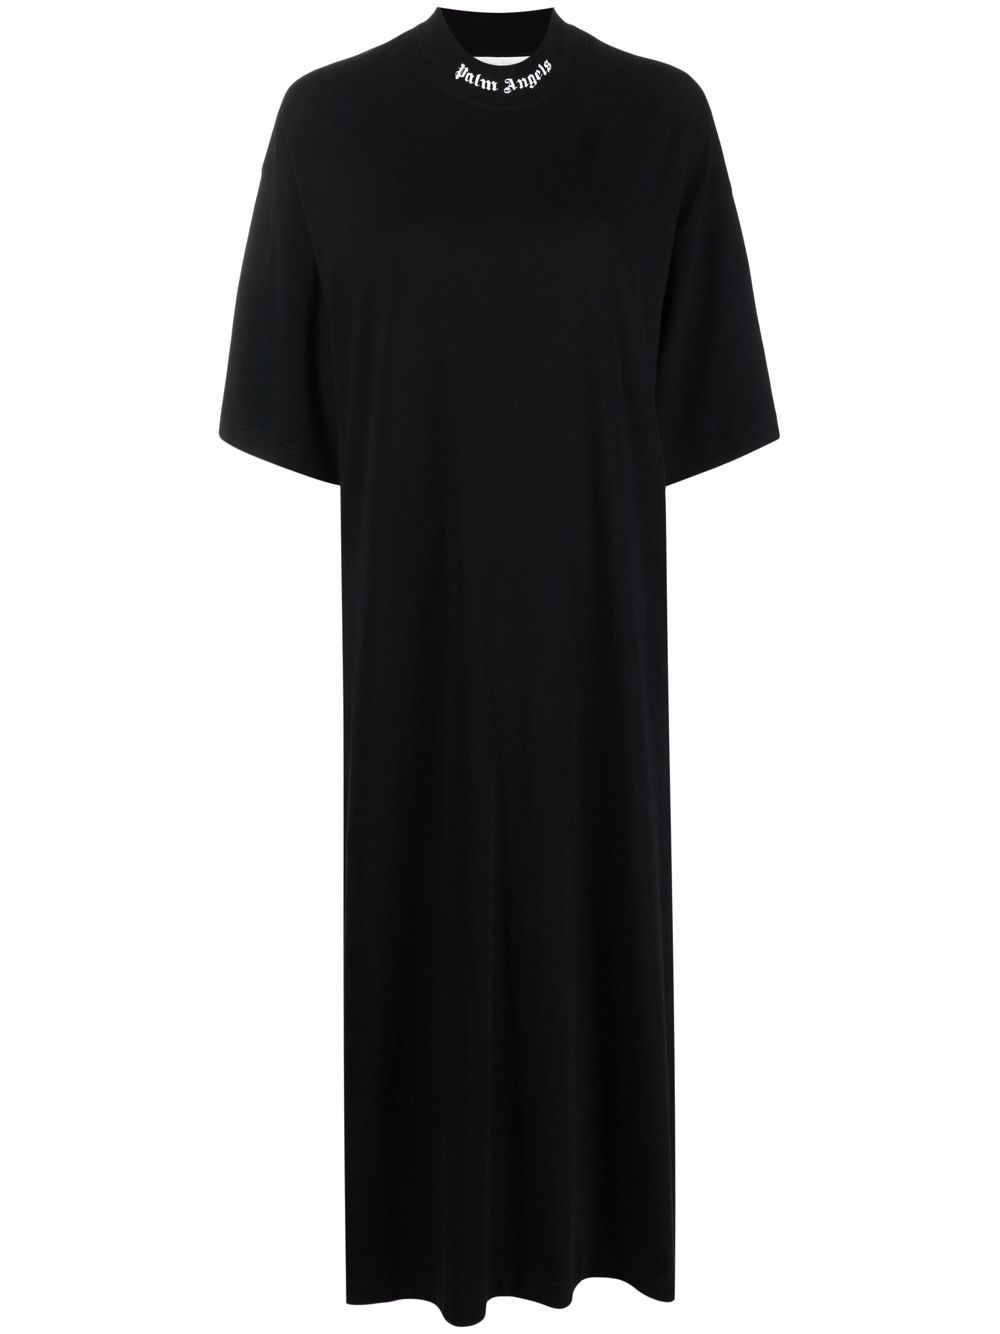 PALM ANGELS WOMEN Logo Over Tee Dress Black White